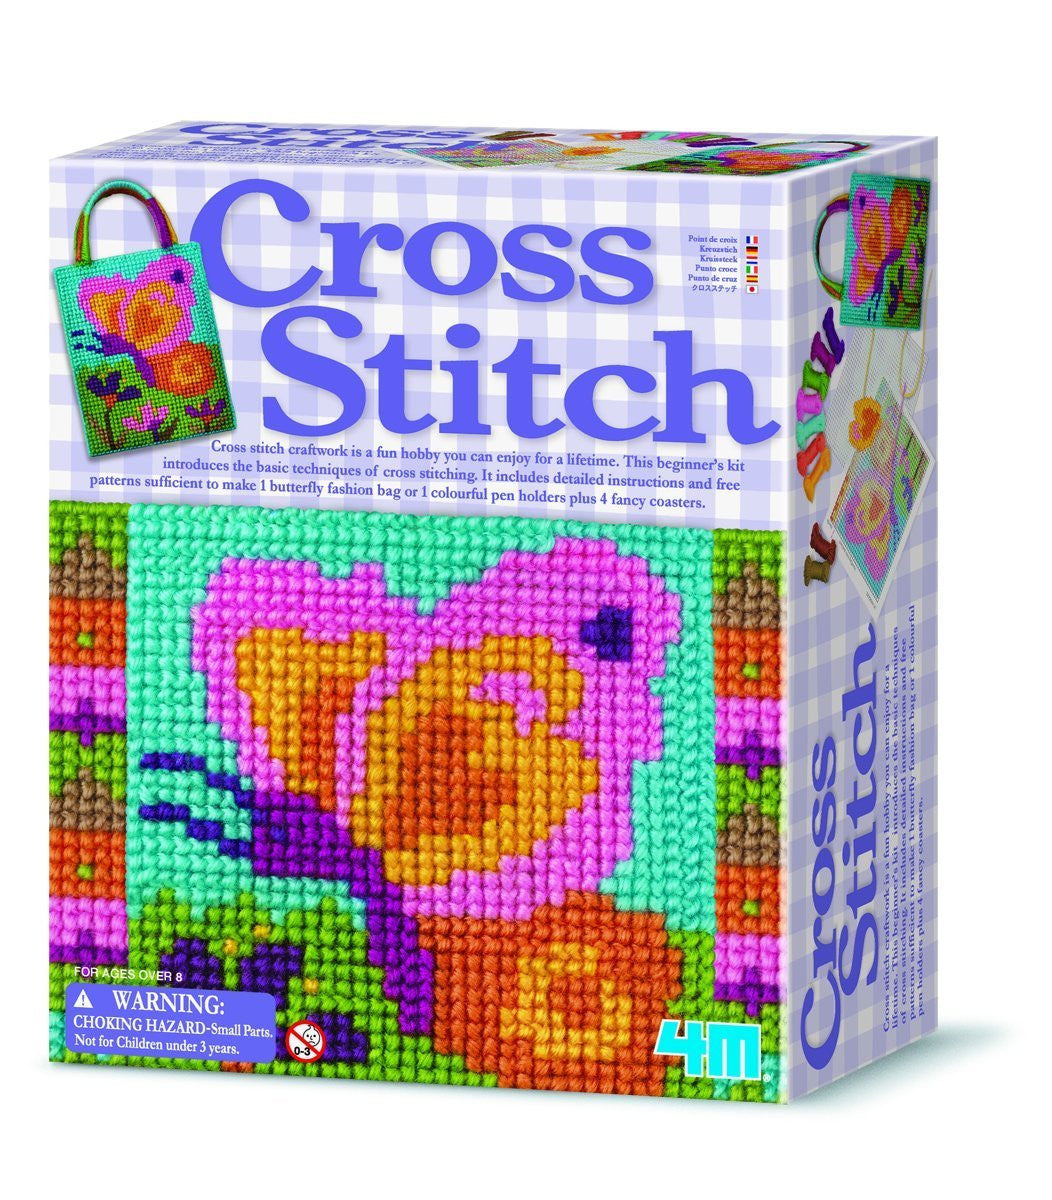 4m-cross-stitch-kit-kid-play-games-learn-craft-knit-2749-01